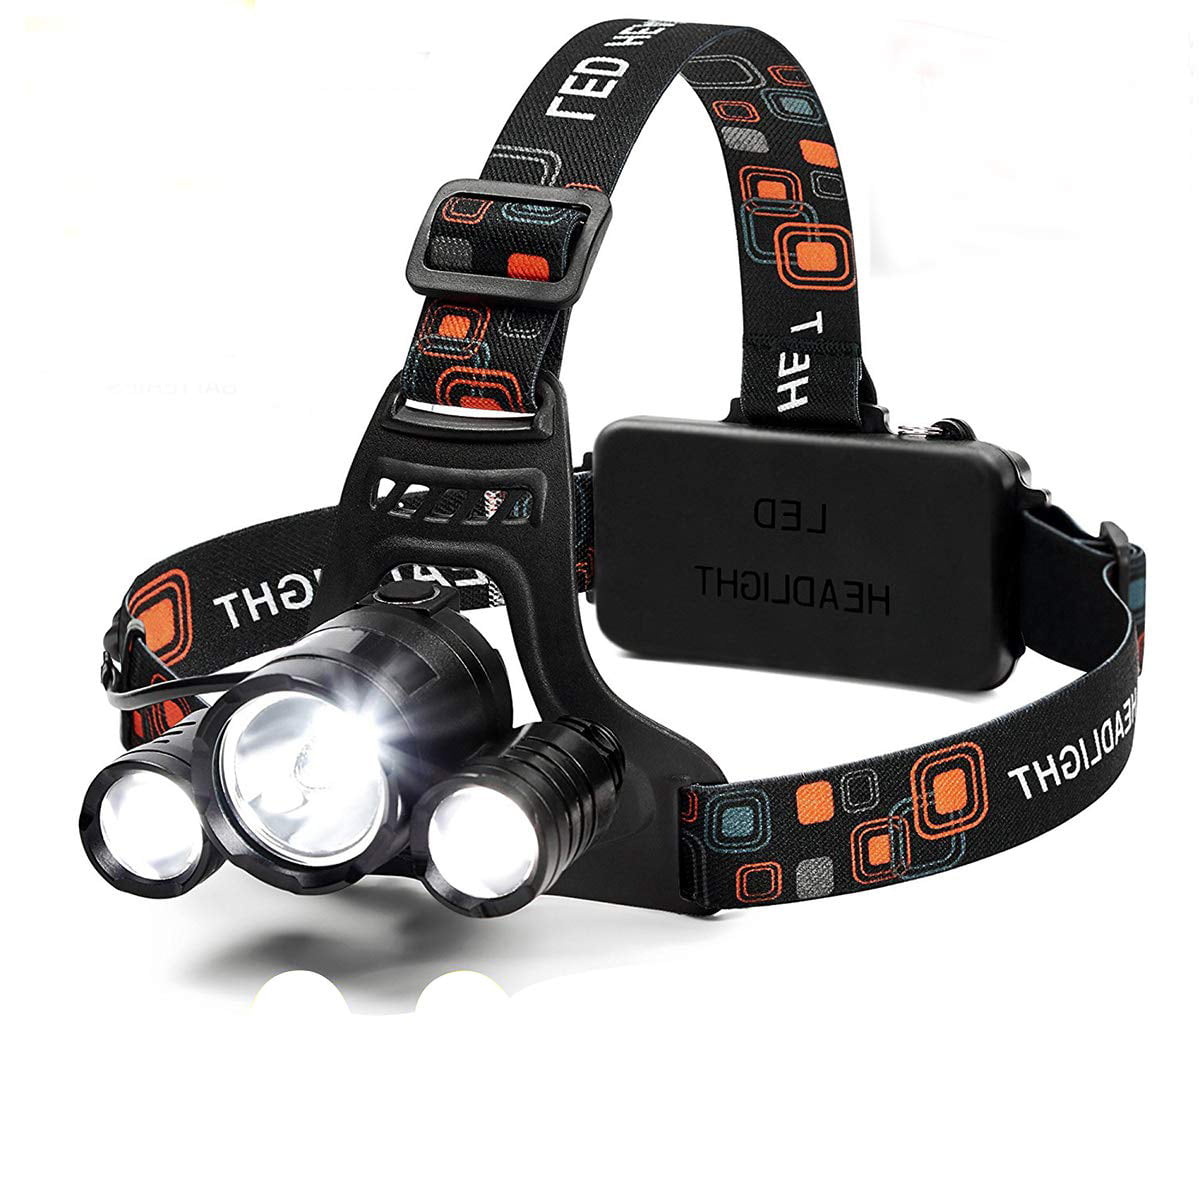 Yizhet Headlight 5 LED Headlamp Fishing Waterproof Head Torch Ultra Bright 6000 